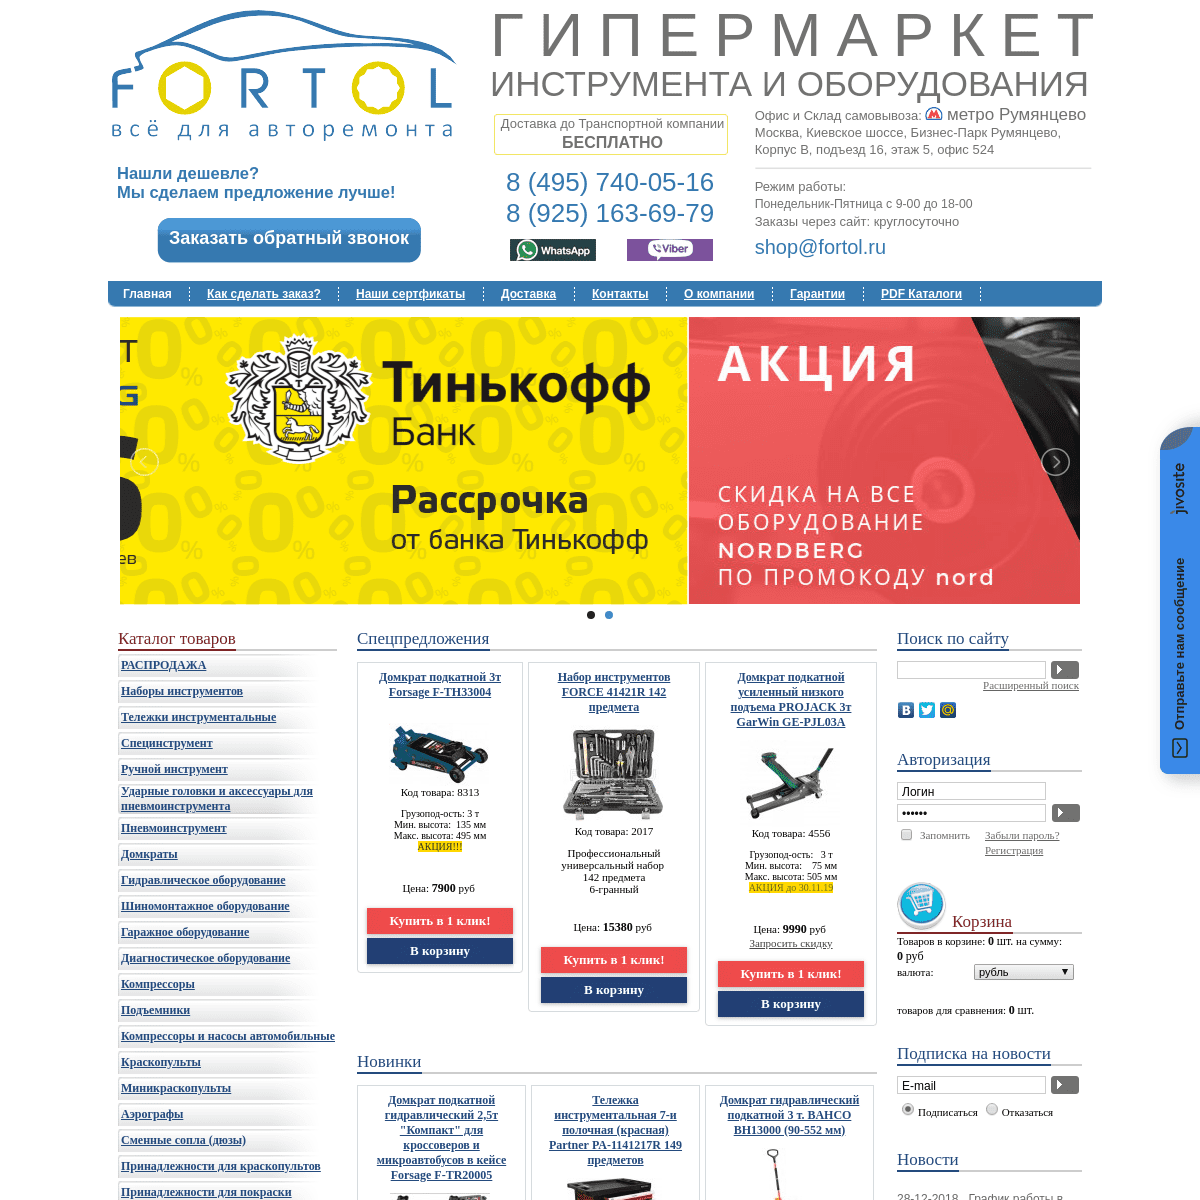 A complete backup of fortol.ru